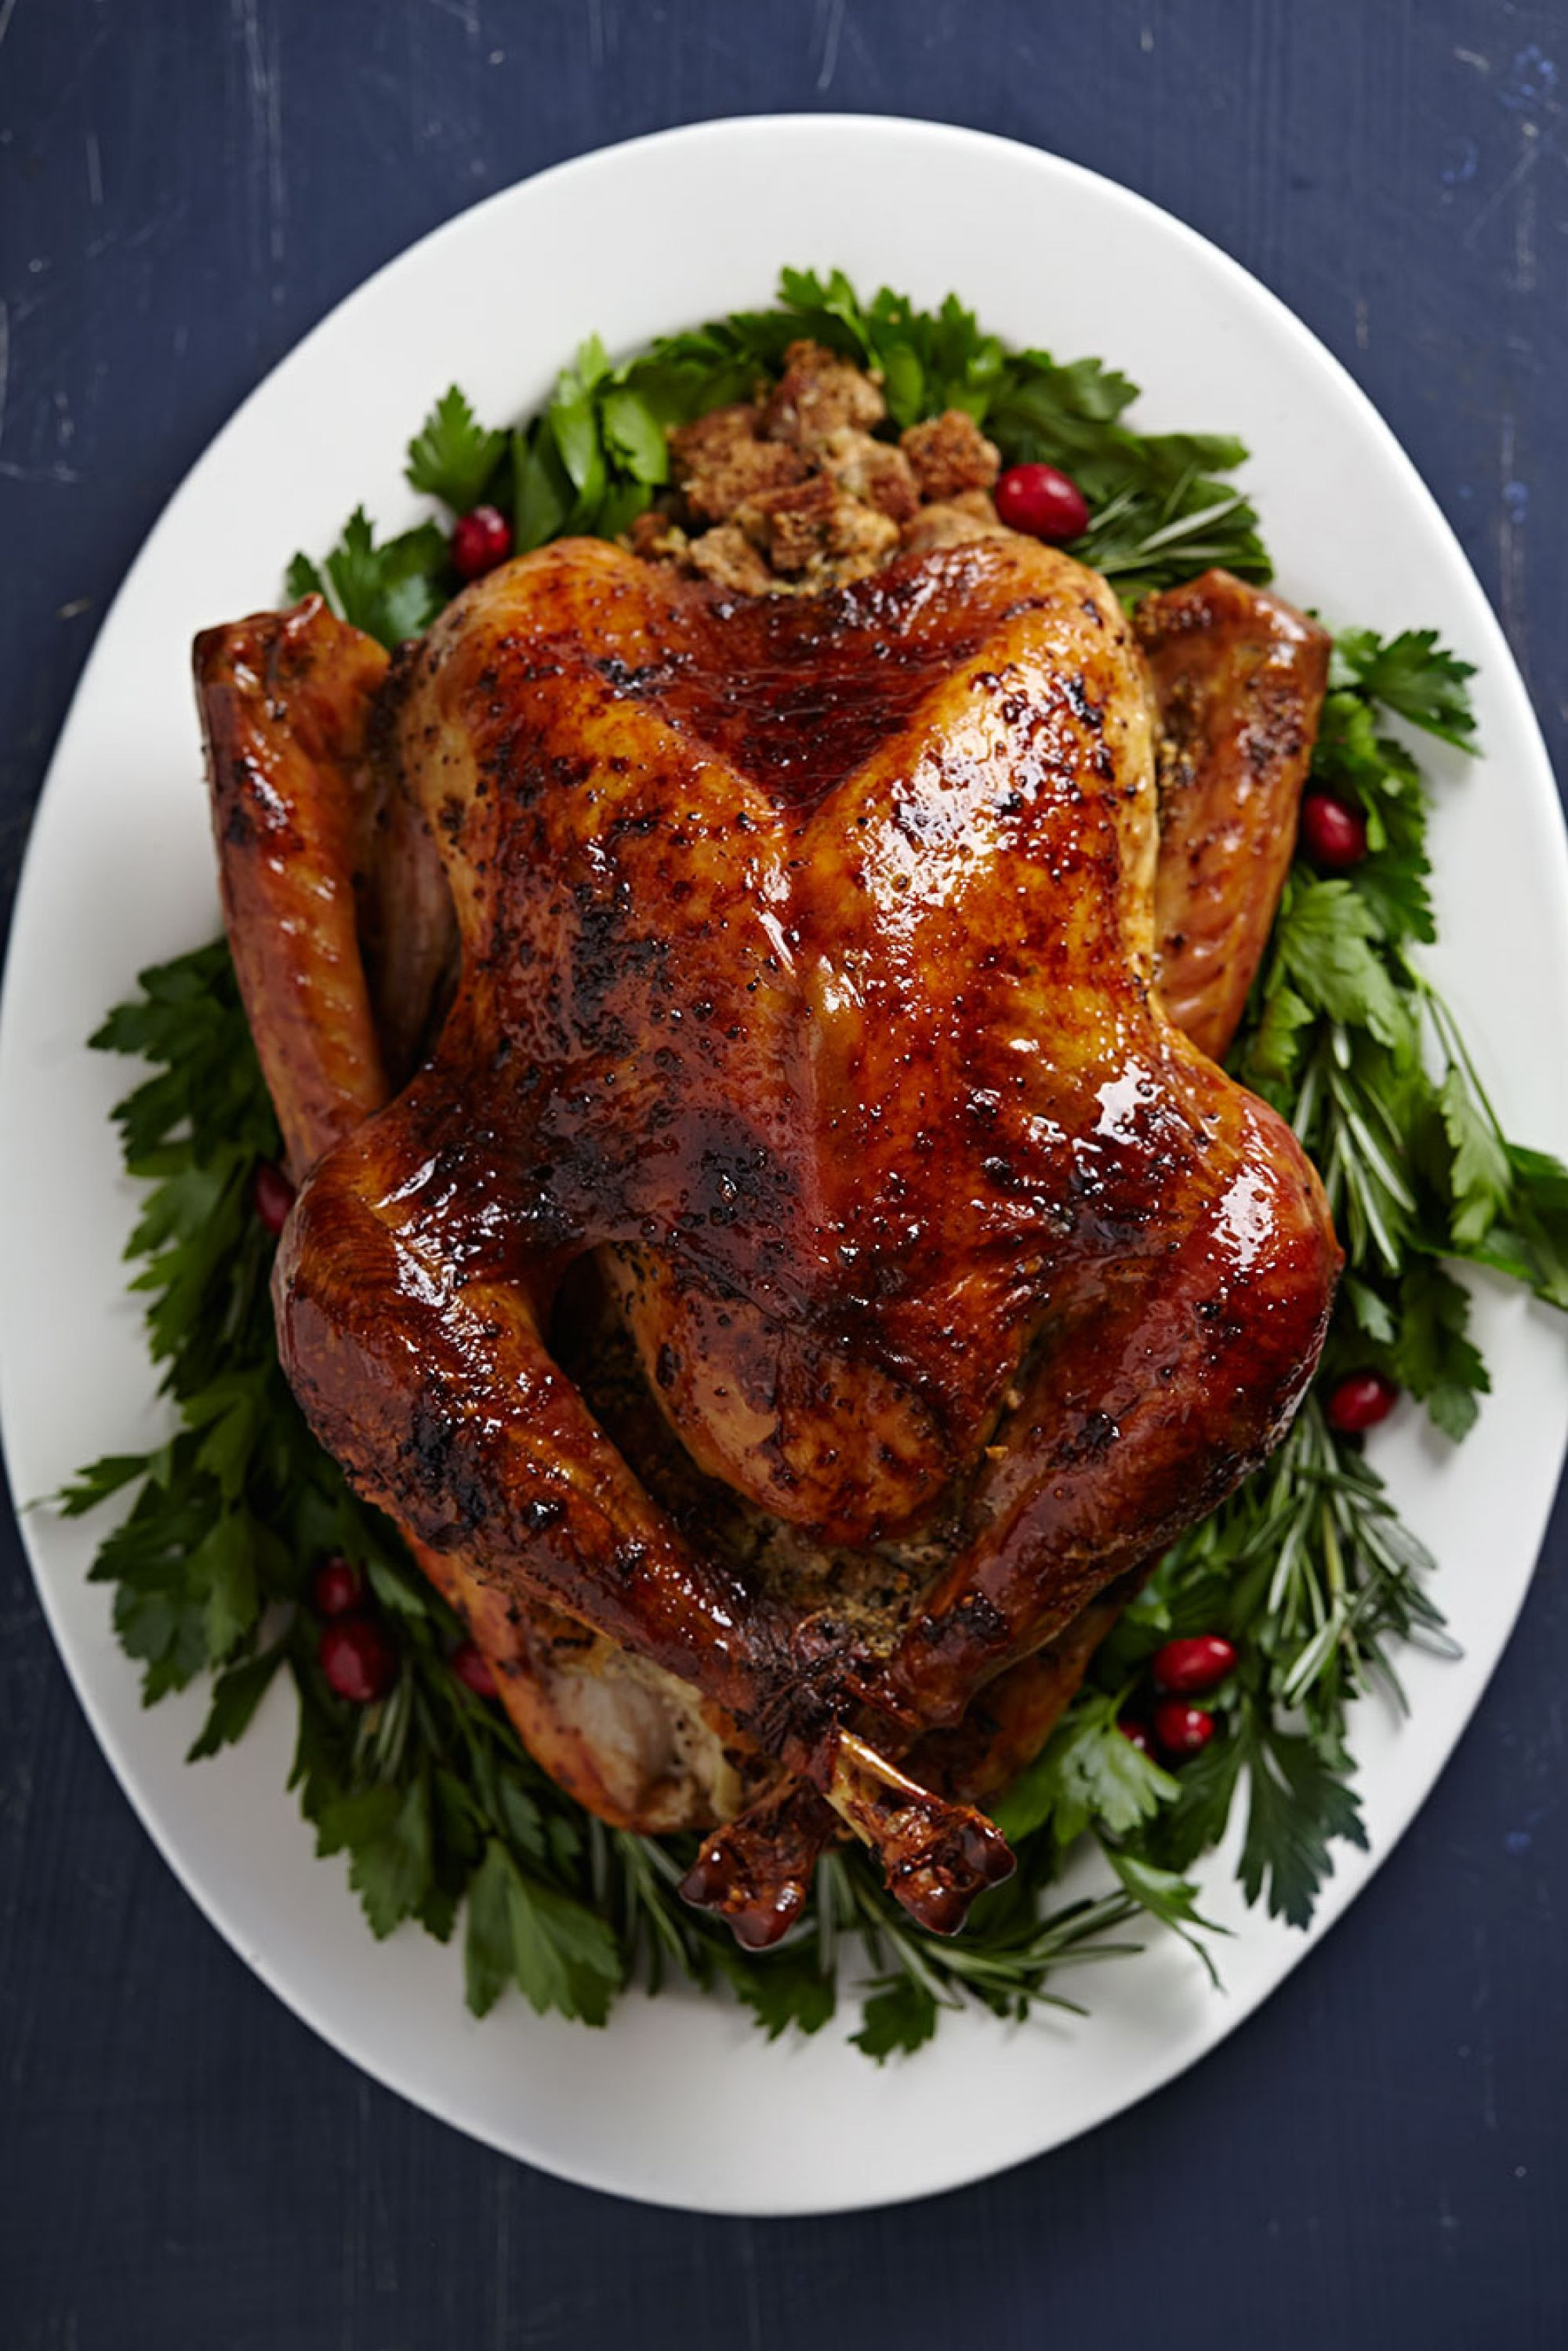 Recipes For Thanksgiving Turkey
 Planning a Thanksgiving Menu 25 Amazing Recipes